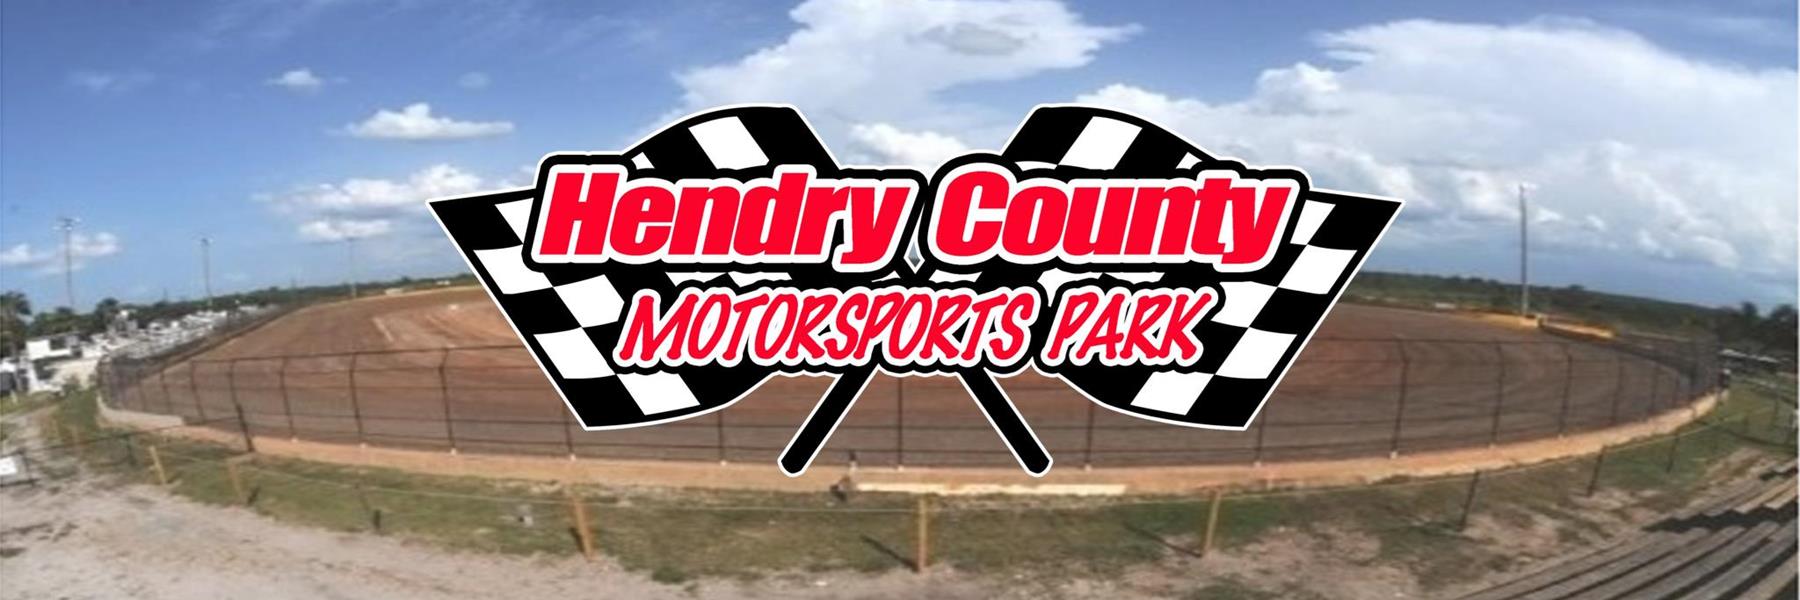 12/2/2022 - Hendry County Motorsports Park